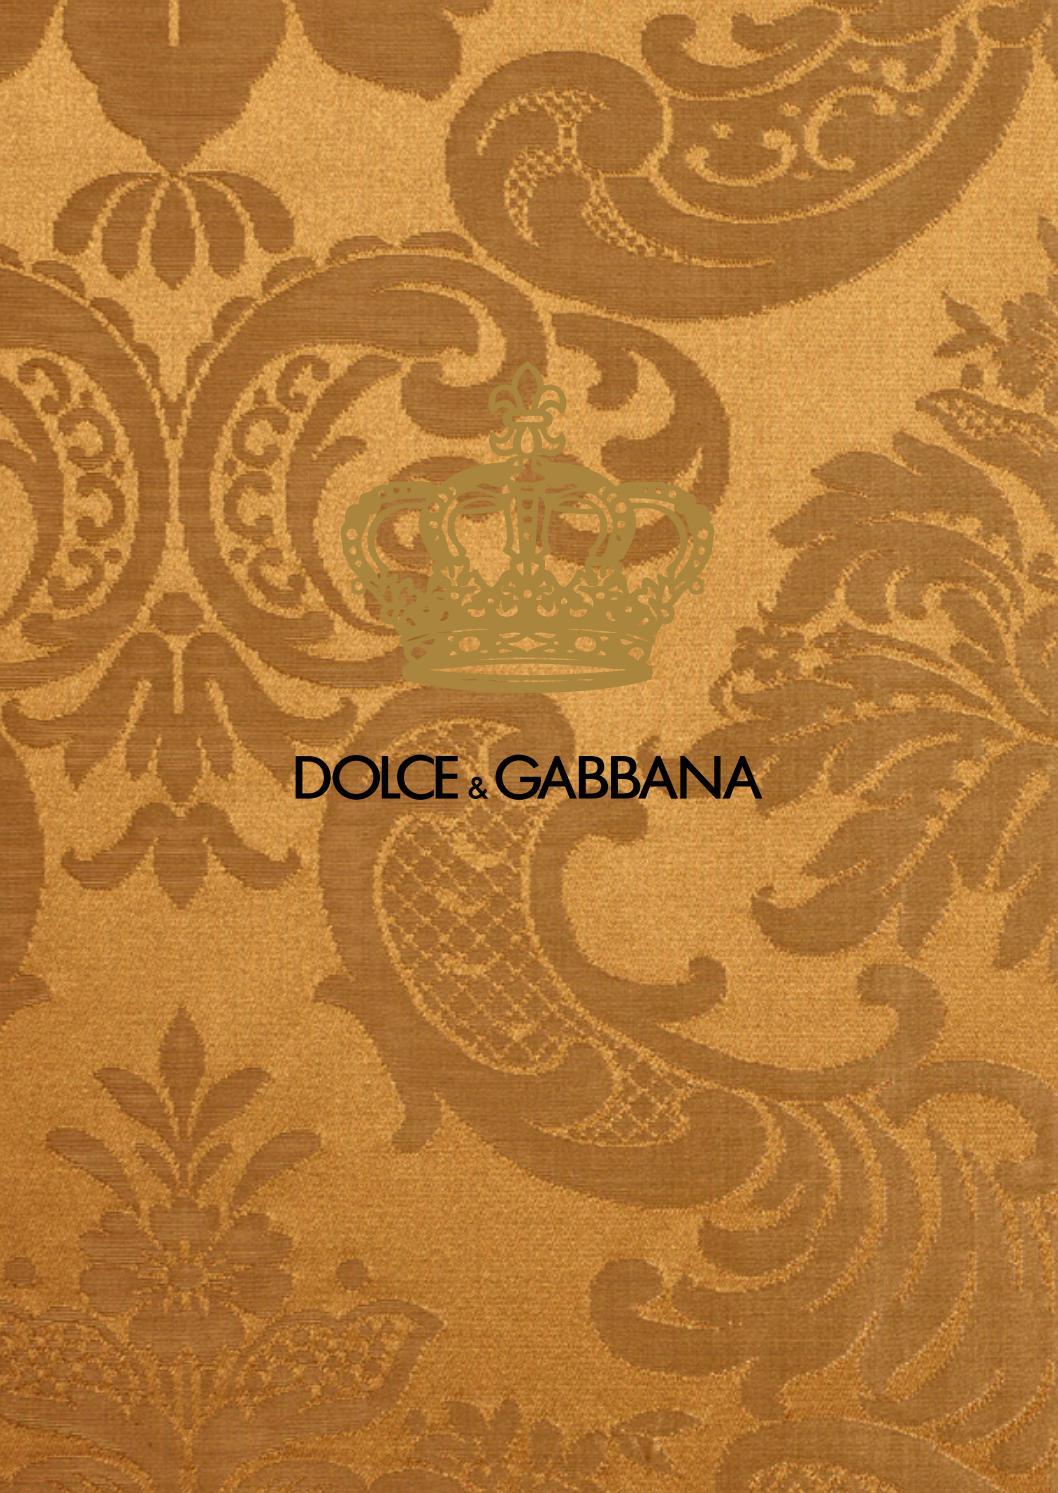 Fall Winter 2016 17 Men's Catalogue By Dolce&Gabbana